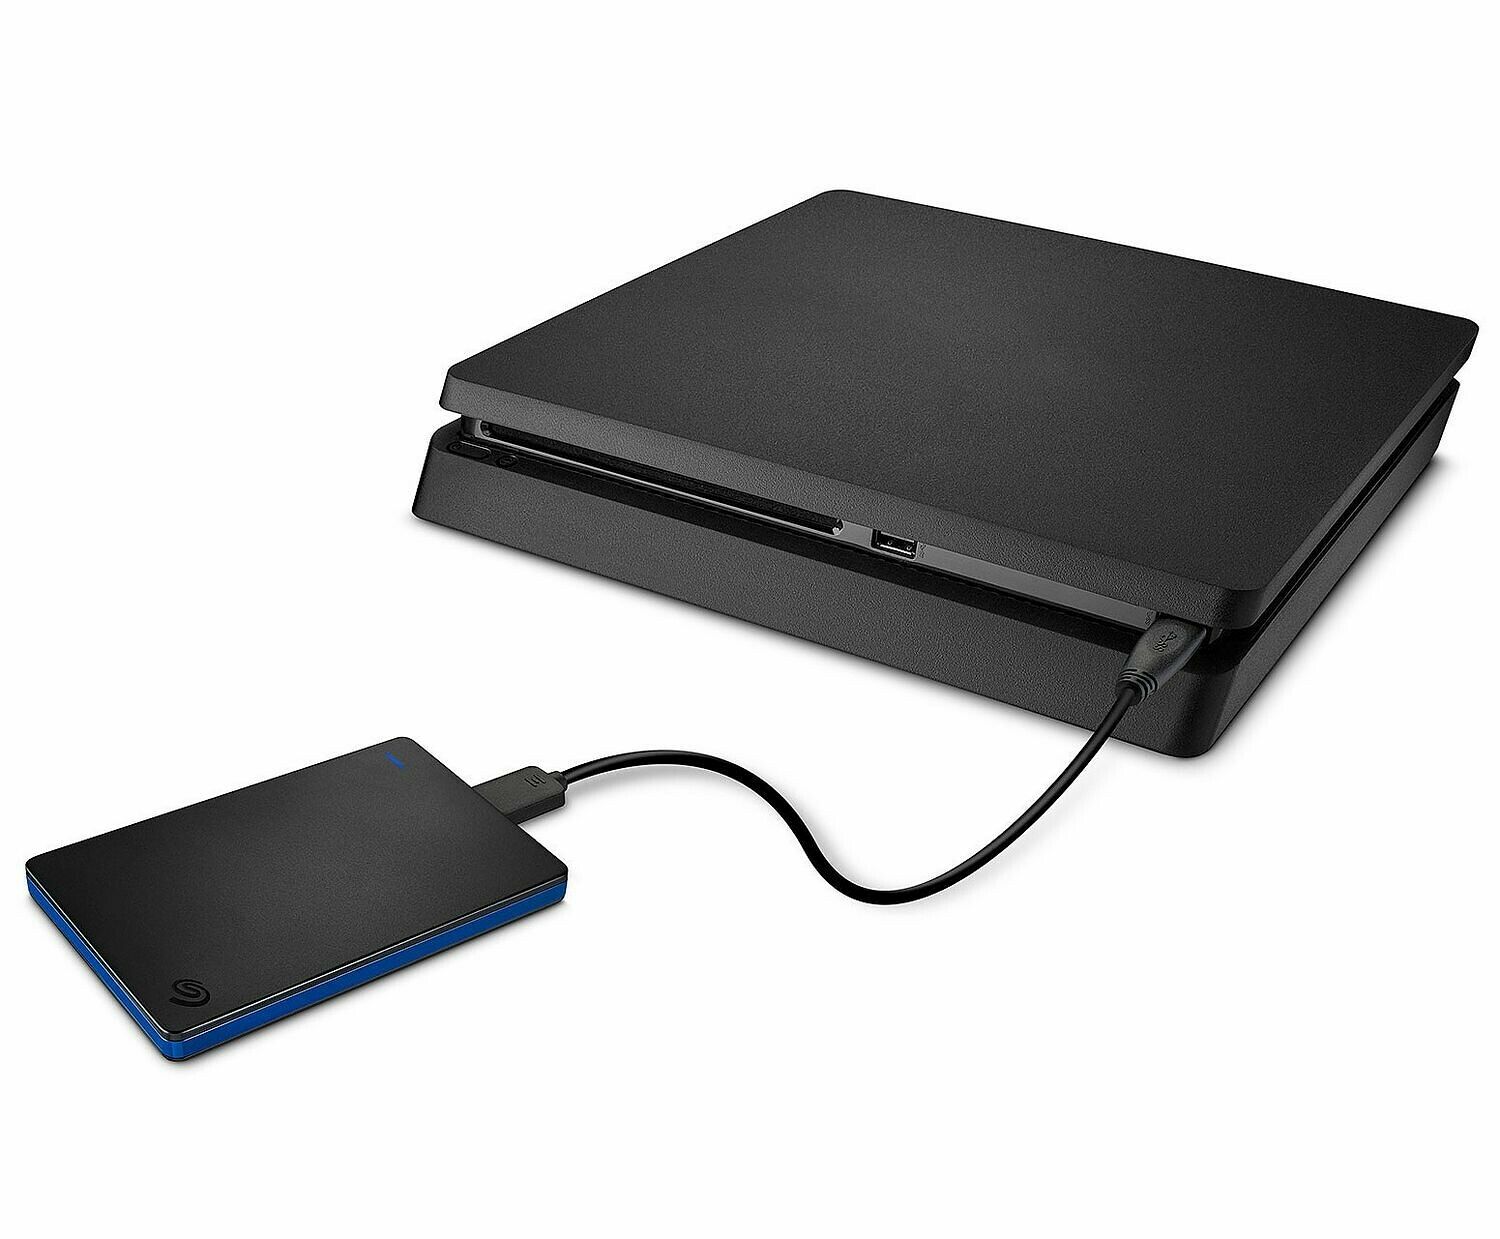 Seagate - Game Drive pour PS4 2To - 2.5 USB 3.0 - Noir - Disque